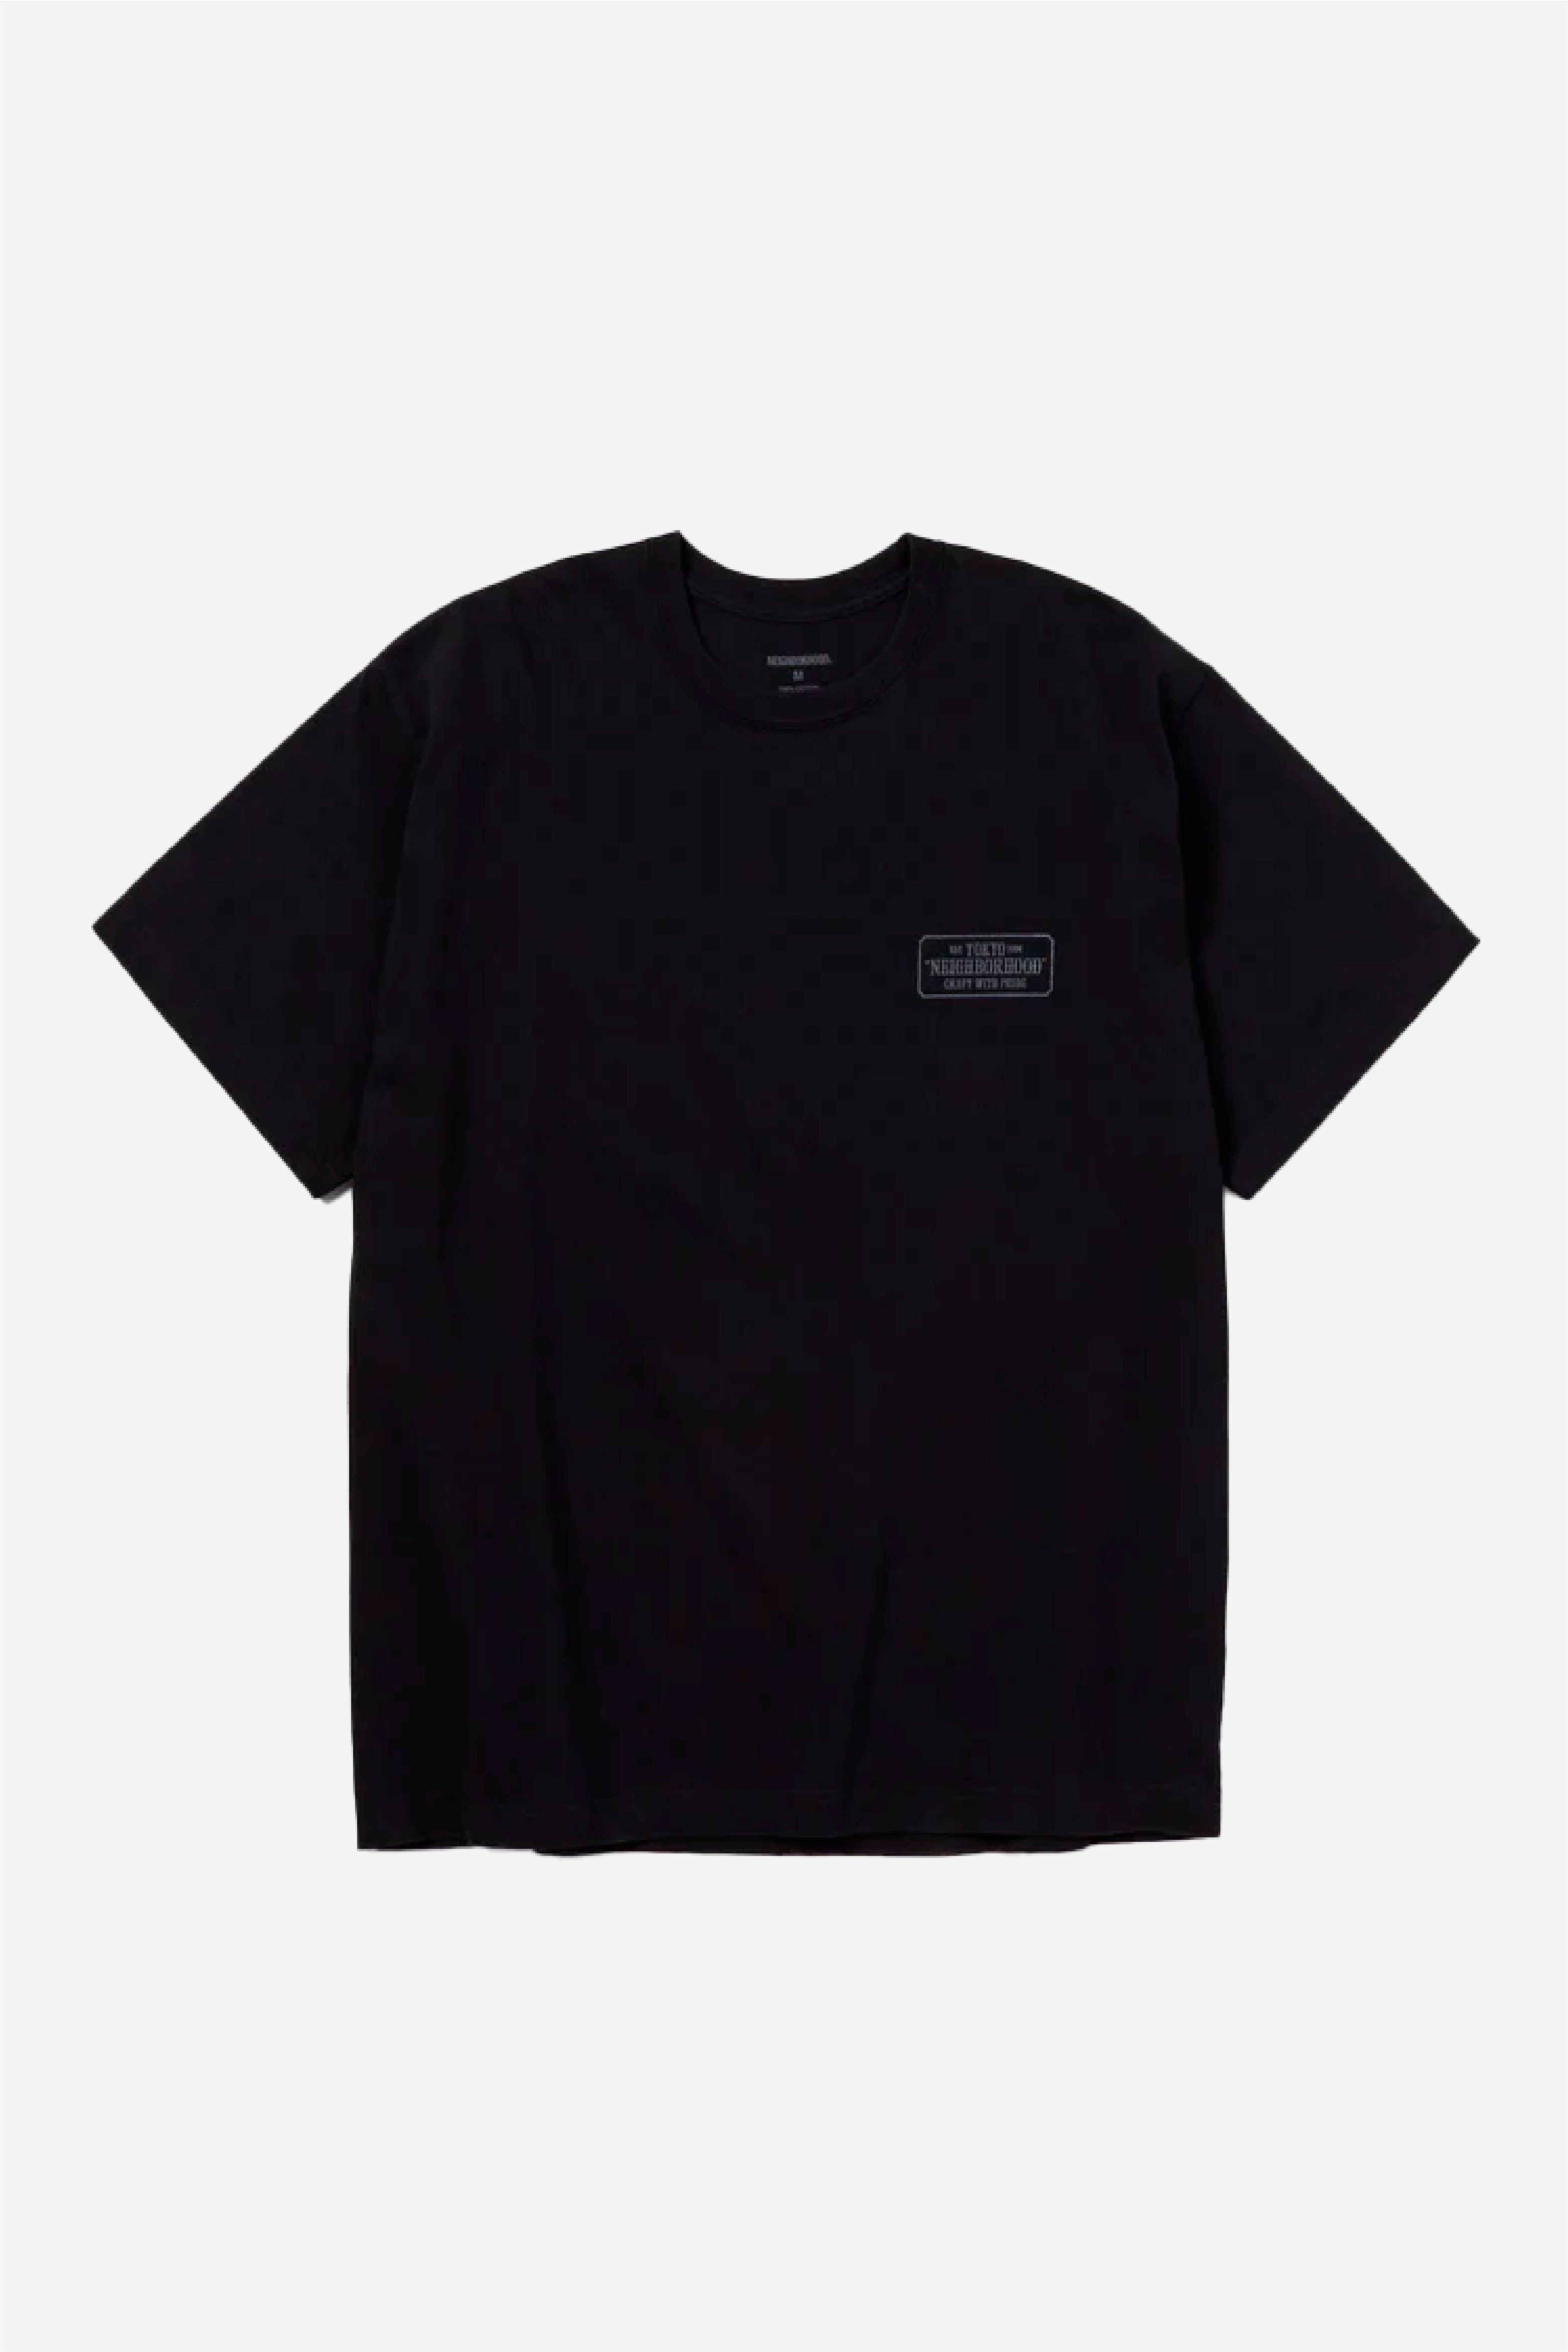 Selectshop FRAME - NEIGHBORHOOD NH-1 / C-Tee T-Shirts Dubai